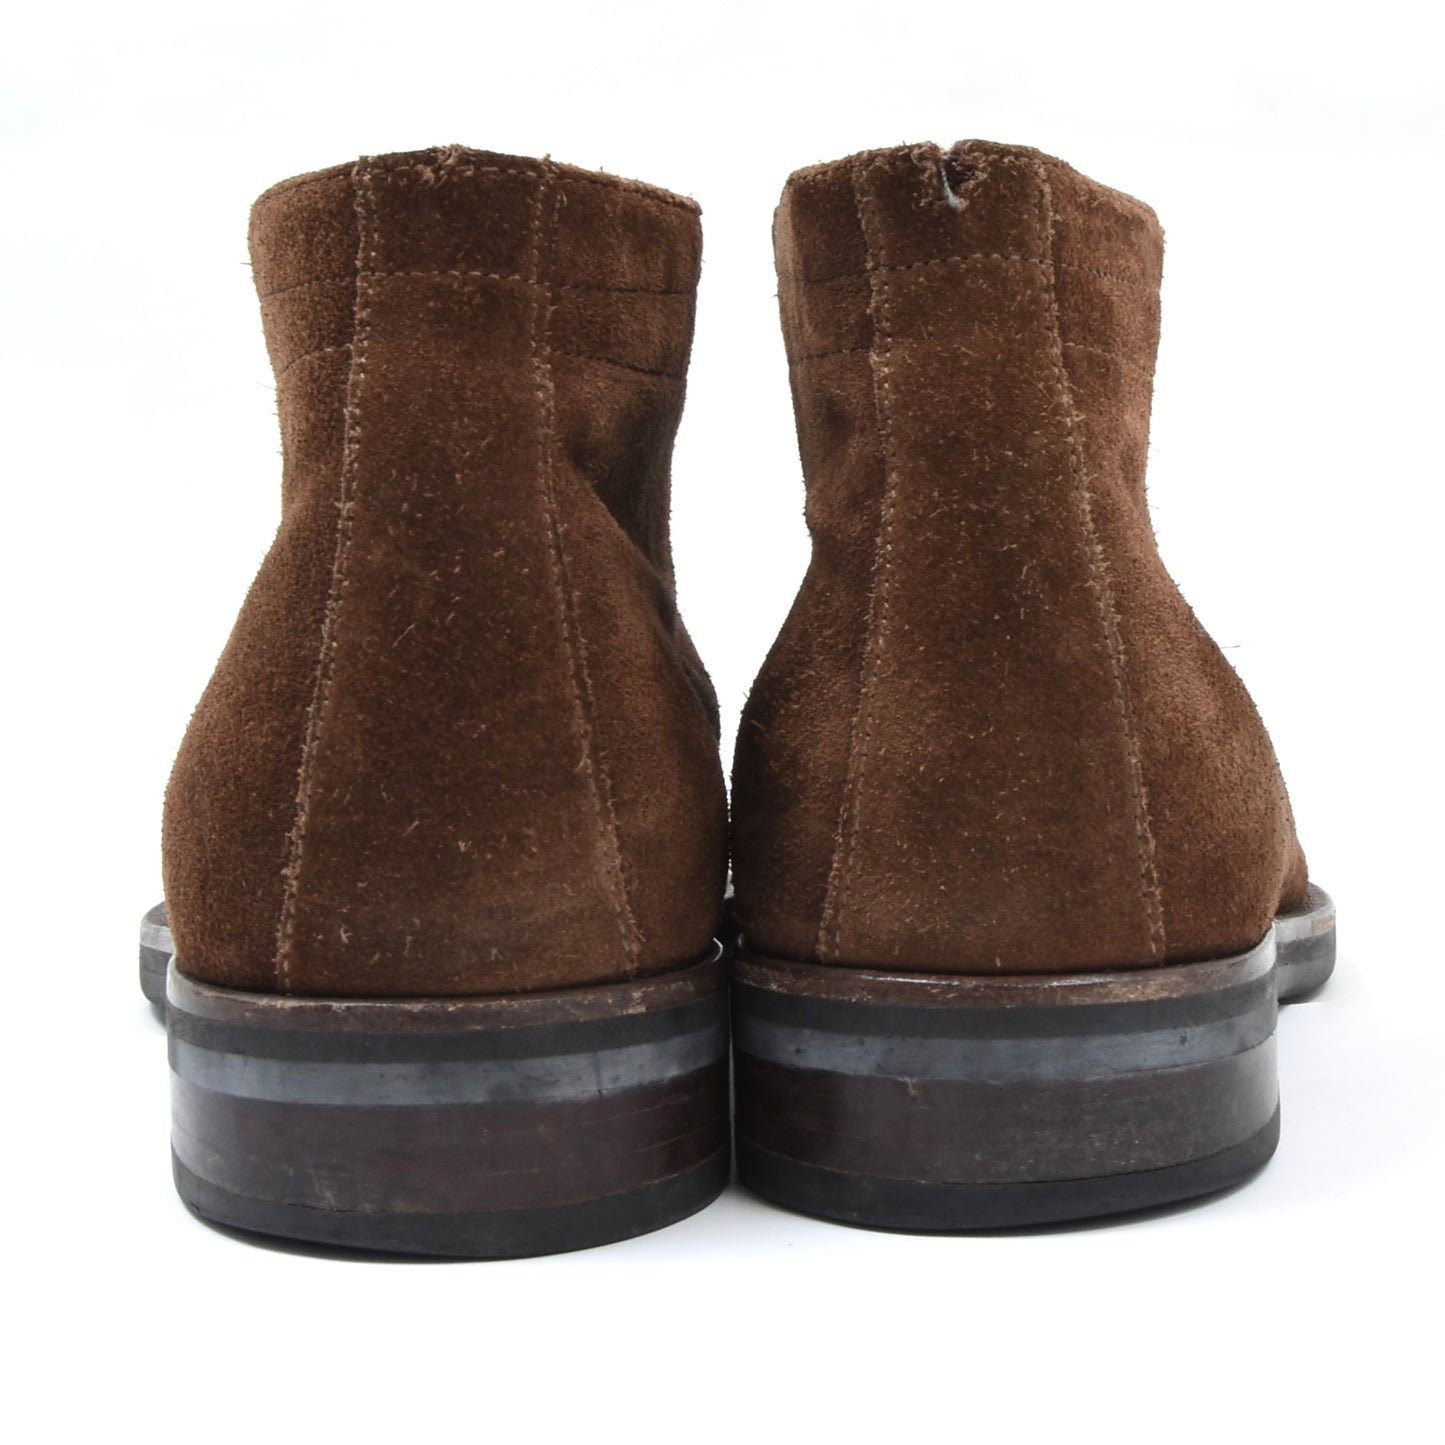 Lederer Suede Chukka Boots Size 7 - Brown